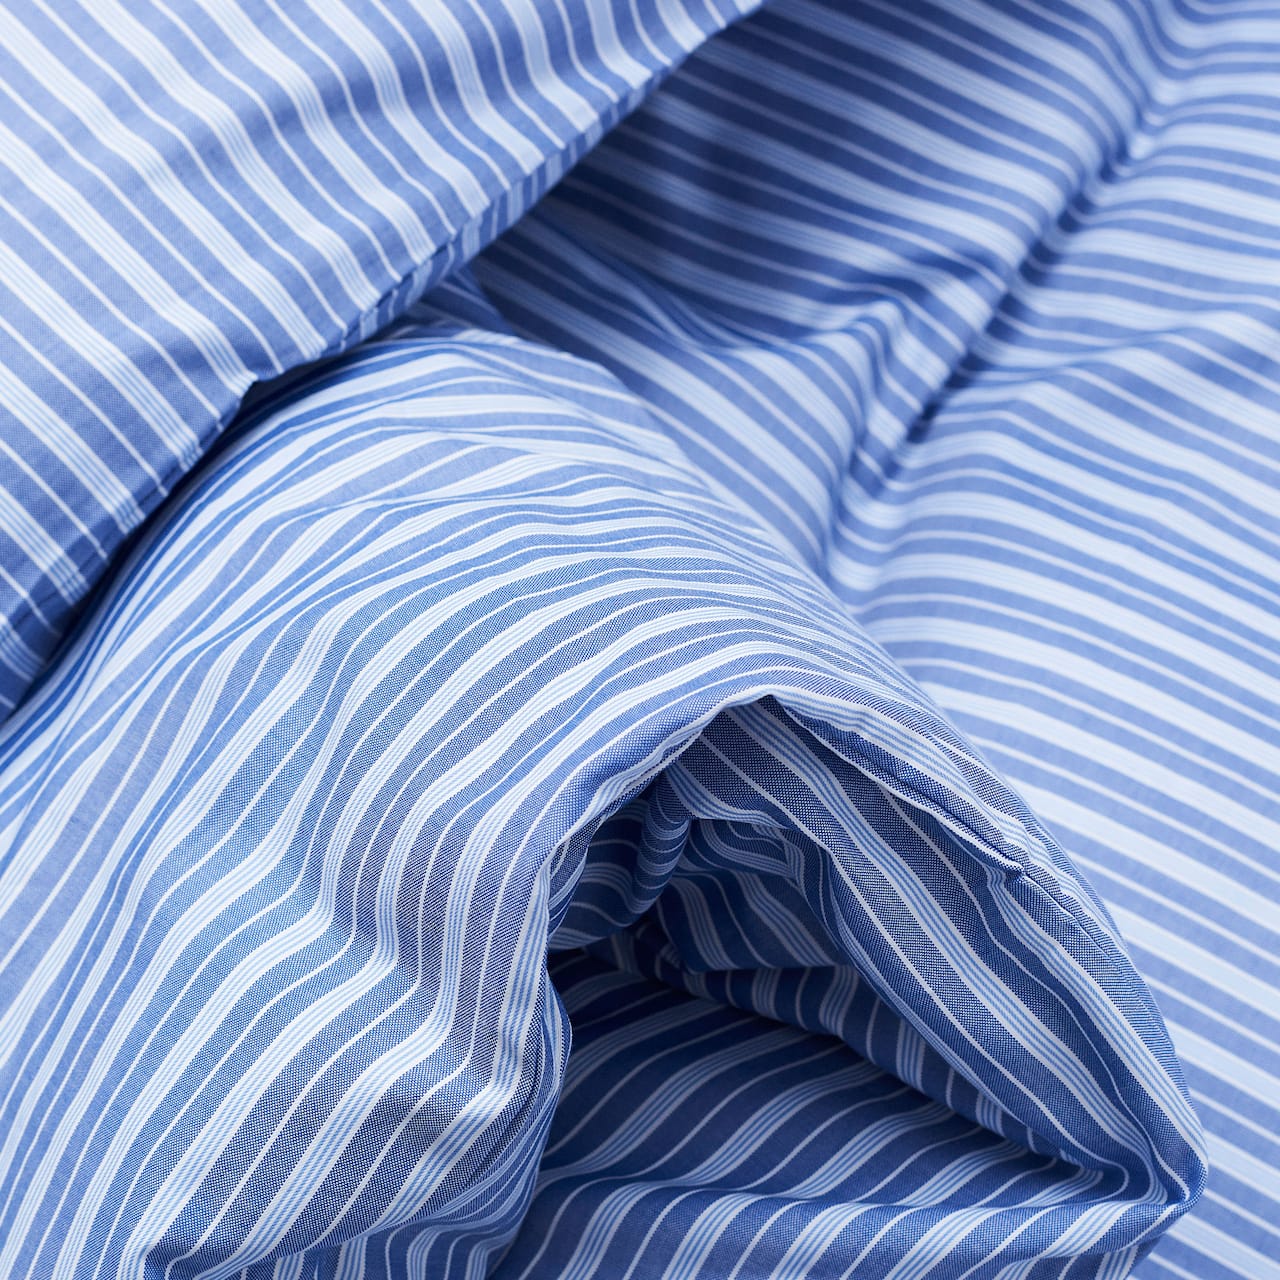 Wall Street Duvet Cover Oxford - Stripe Medium Blue